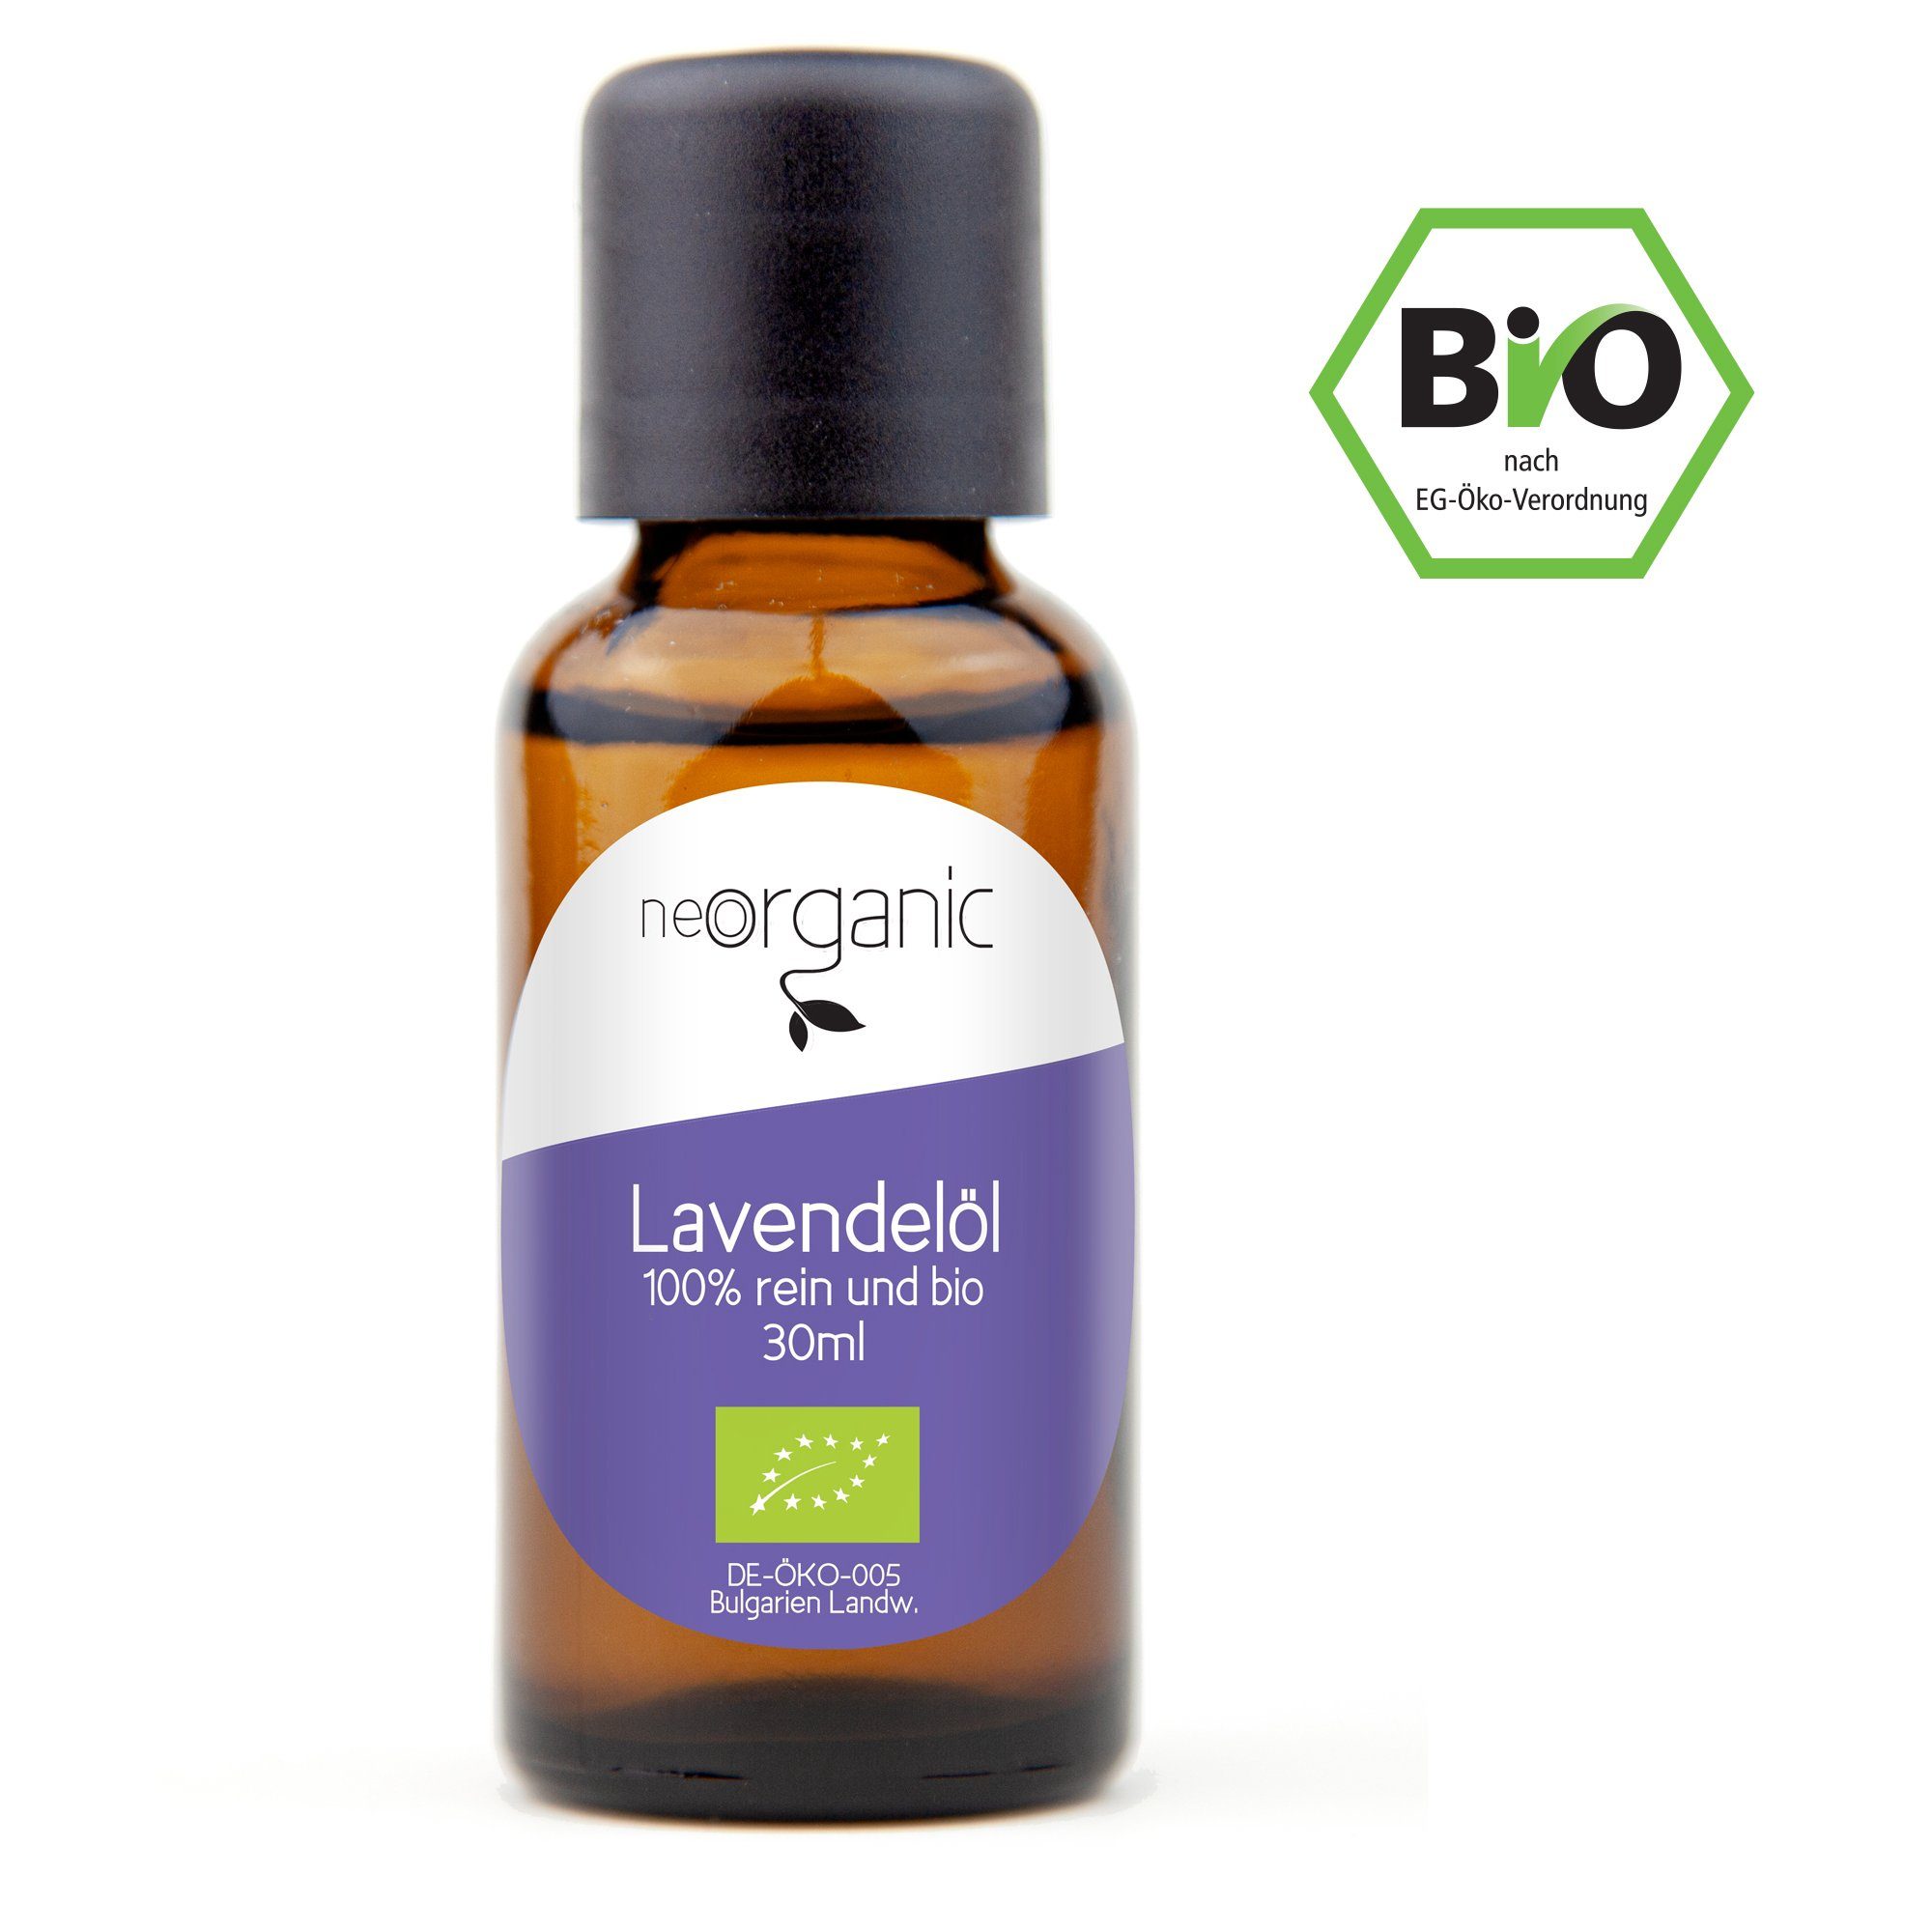 30ml BIO – Duftöl Lavendelöl Angustifolia, aus dem Lavendel echten Lavandula NeoOrganic